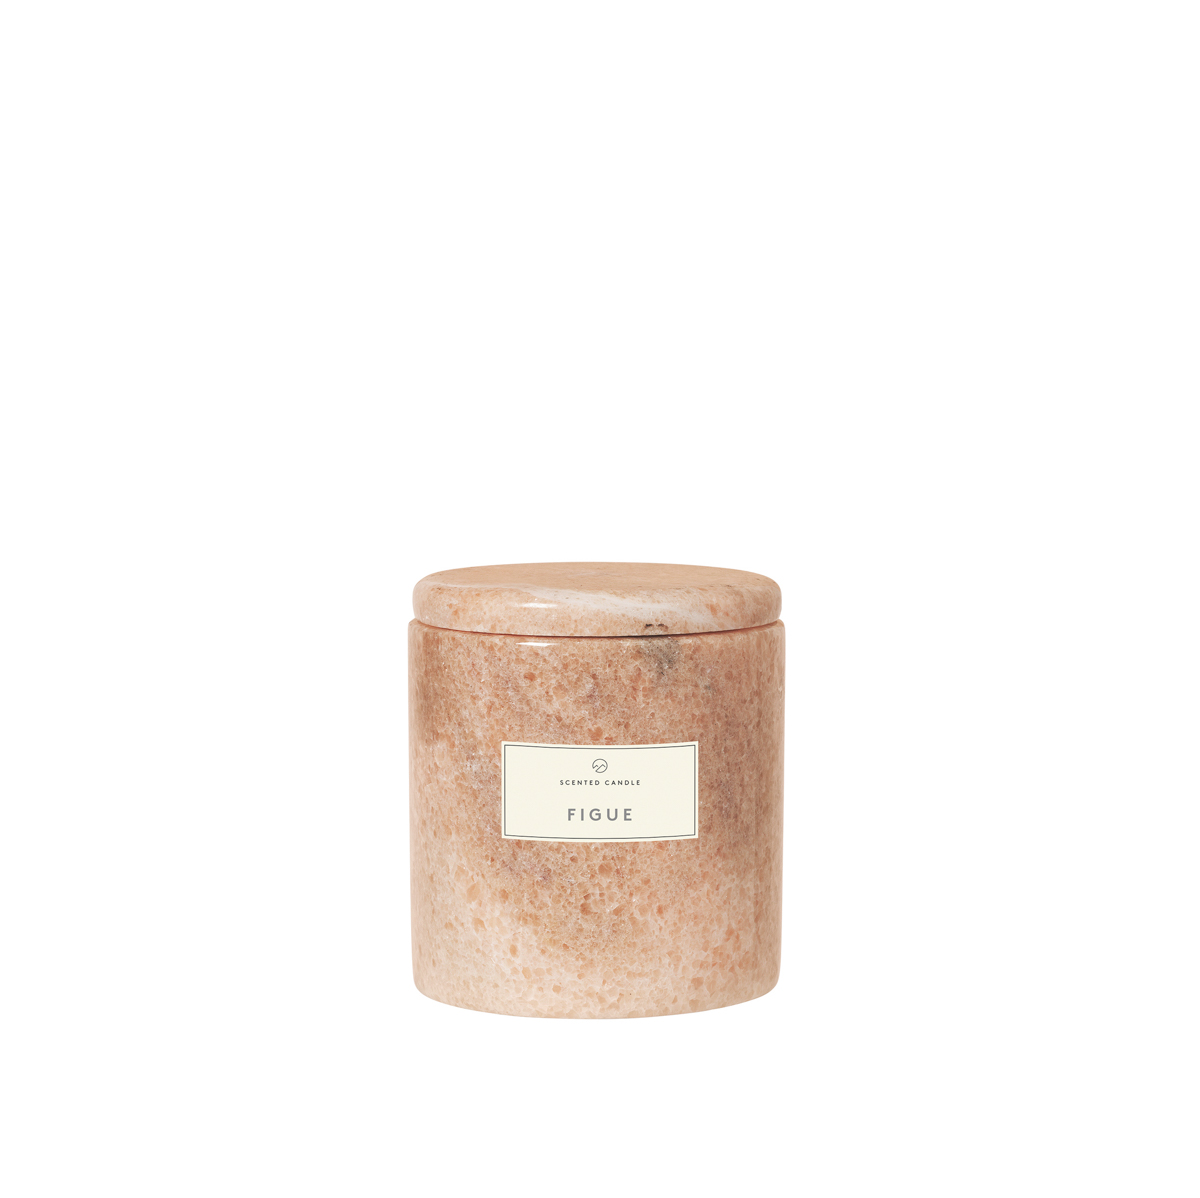 Marmor Duftkerze -FRABLE- Indian Tan, Duft: Figue, Ø 7 cm. Material: Marmor und Soya wachs. Von Blomus.